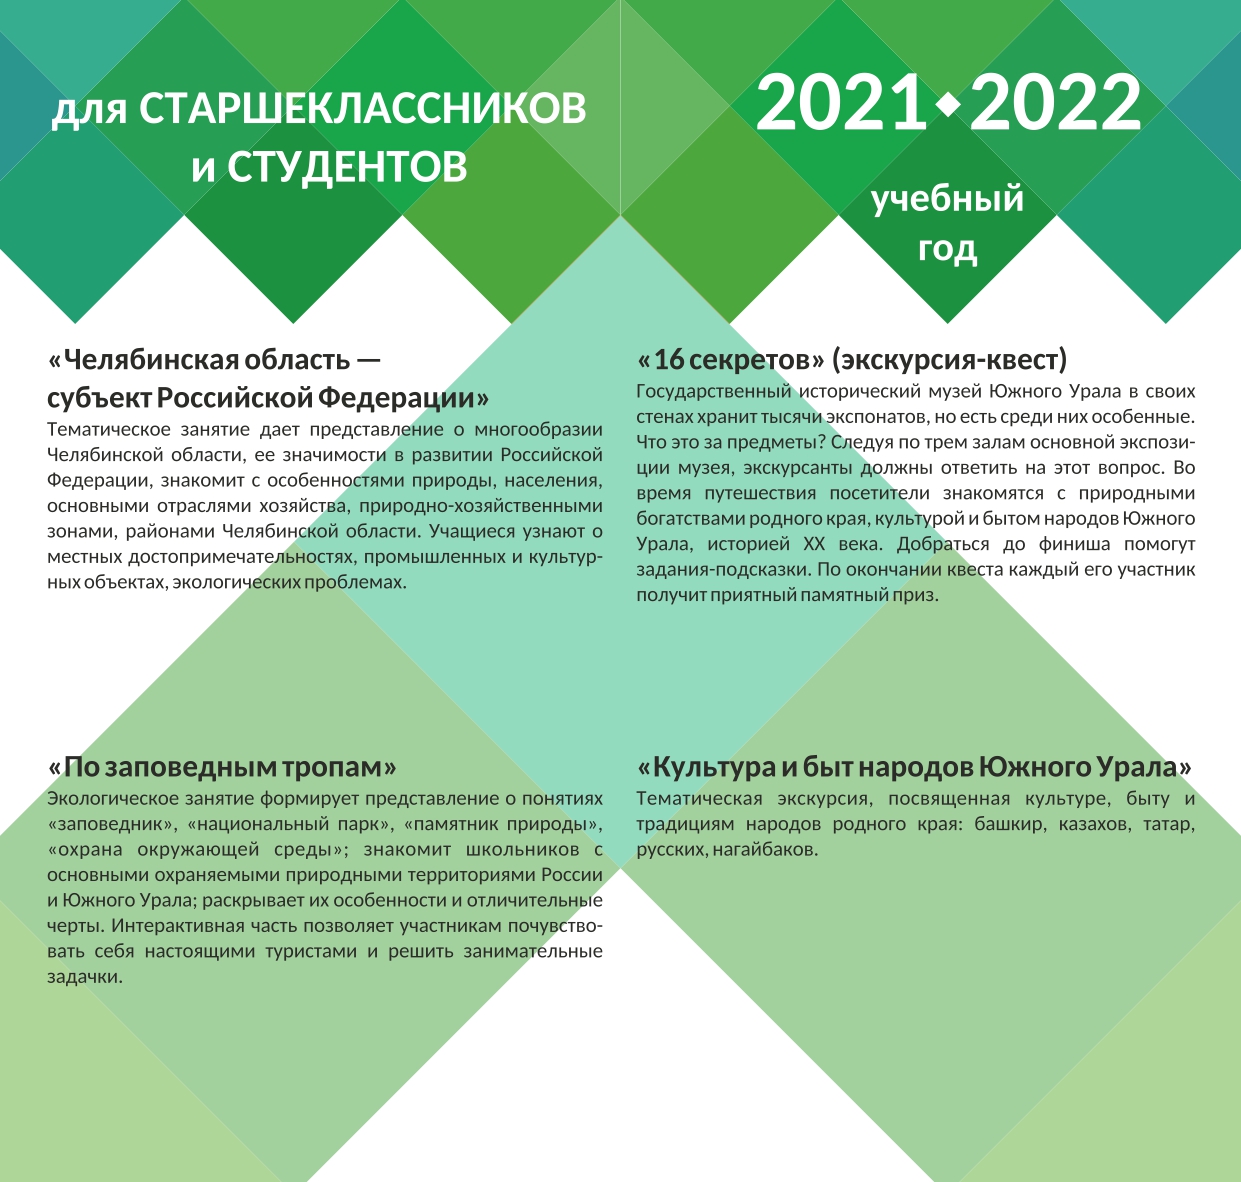 Buklet_tematicheskie_zanyatia_2021-2022_page-0006.jpg